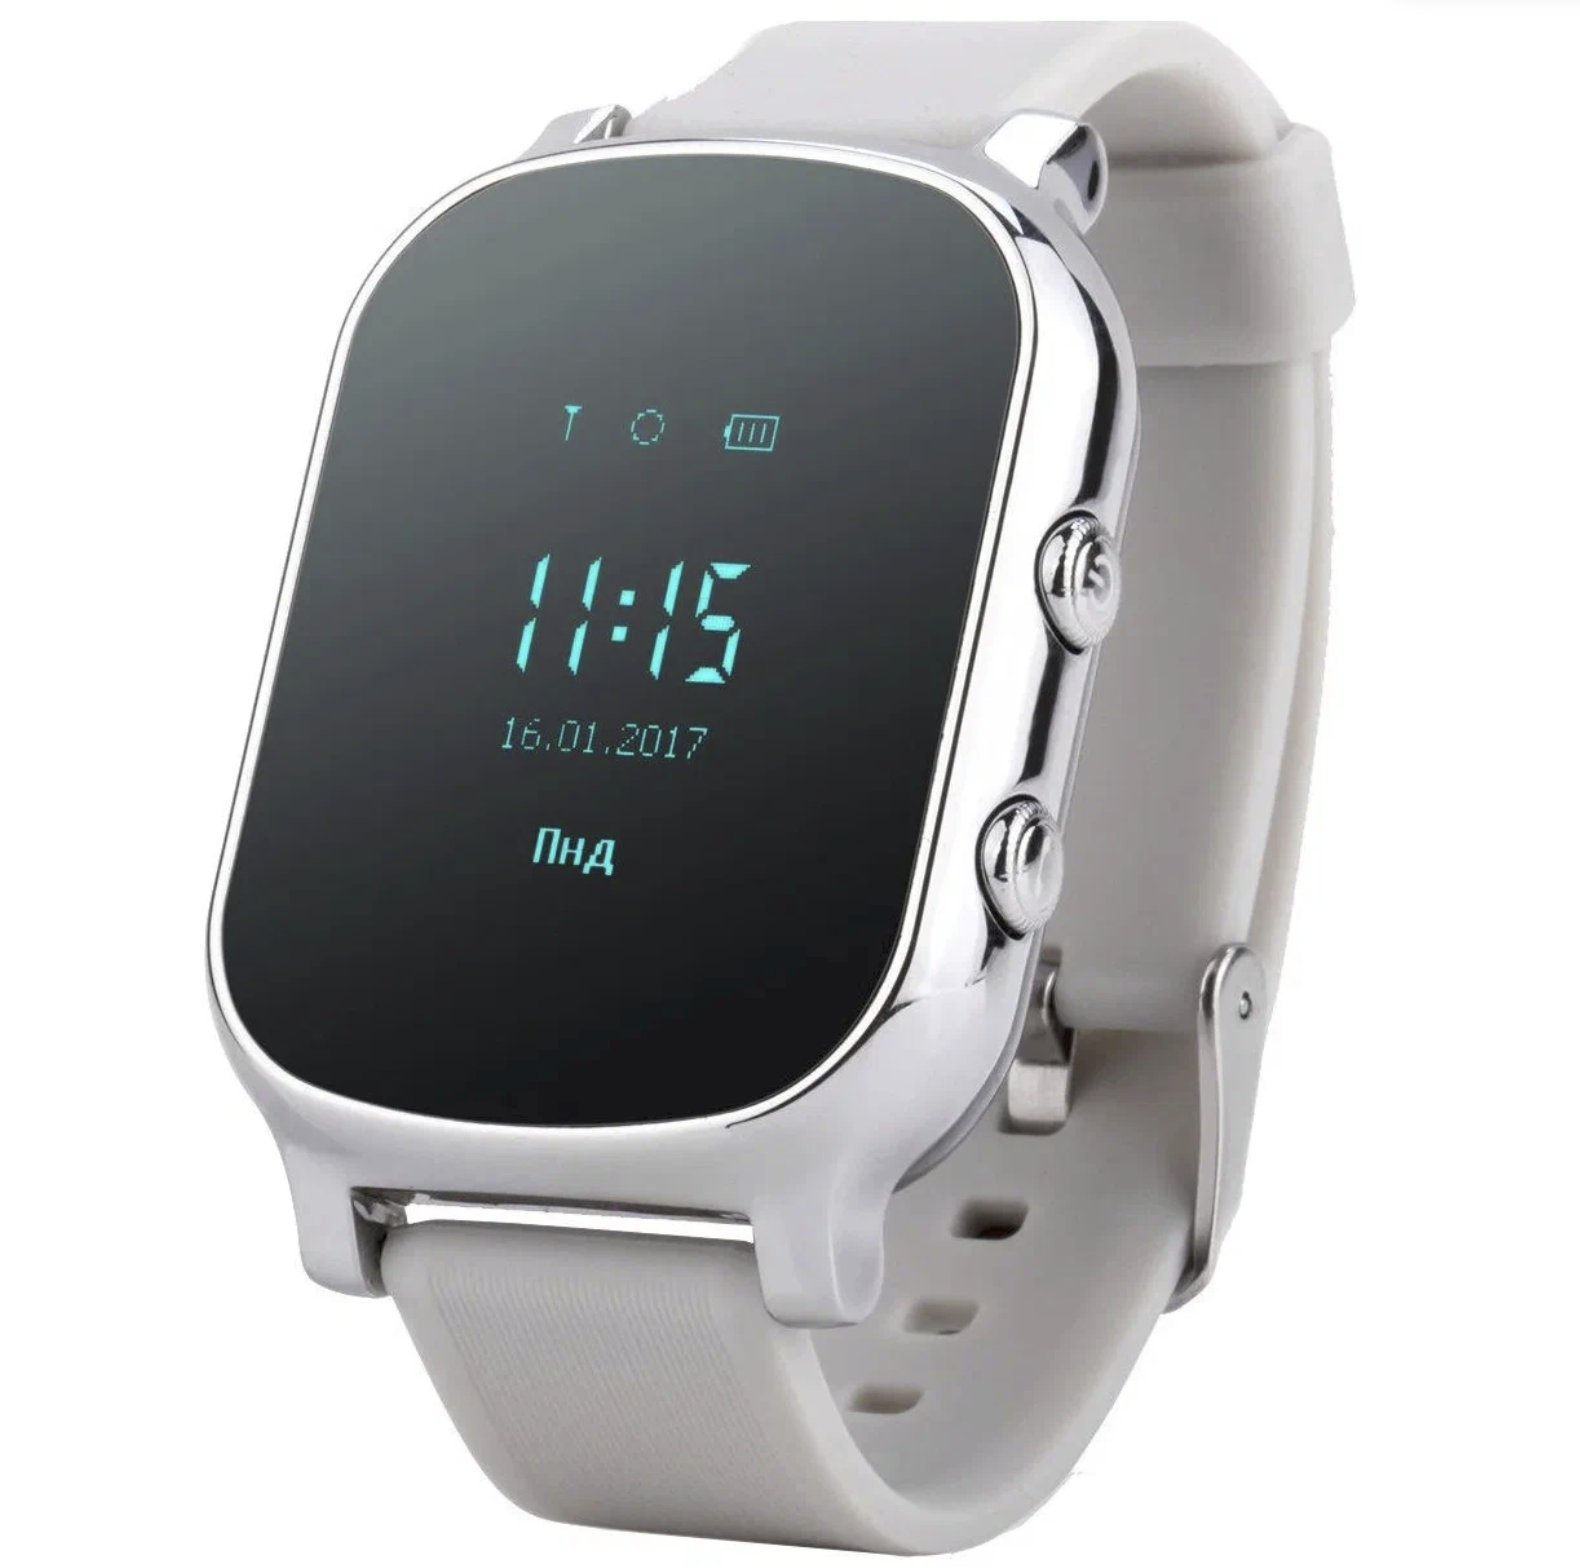 T watch часы. Часы Smart Baby watch t58. Часы Wonlex gw700. Смарт часы бэби вотч т 58. Smart GPS watch t58.